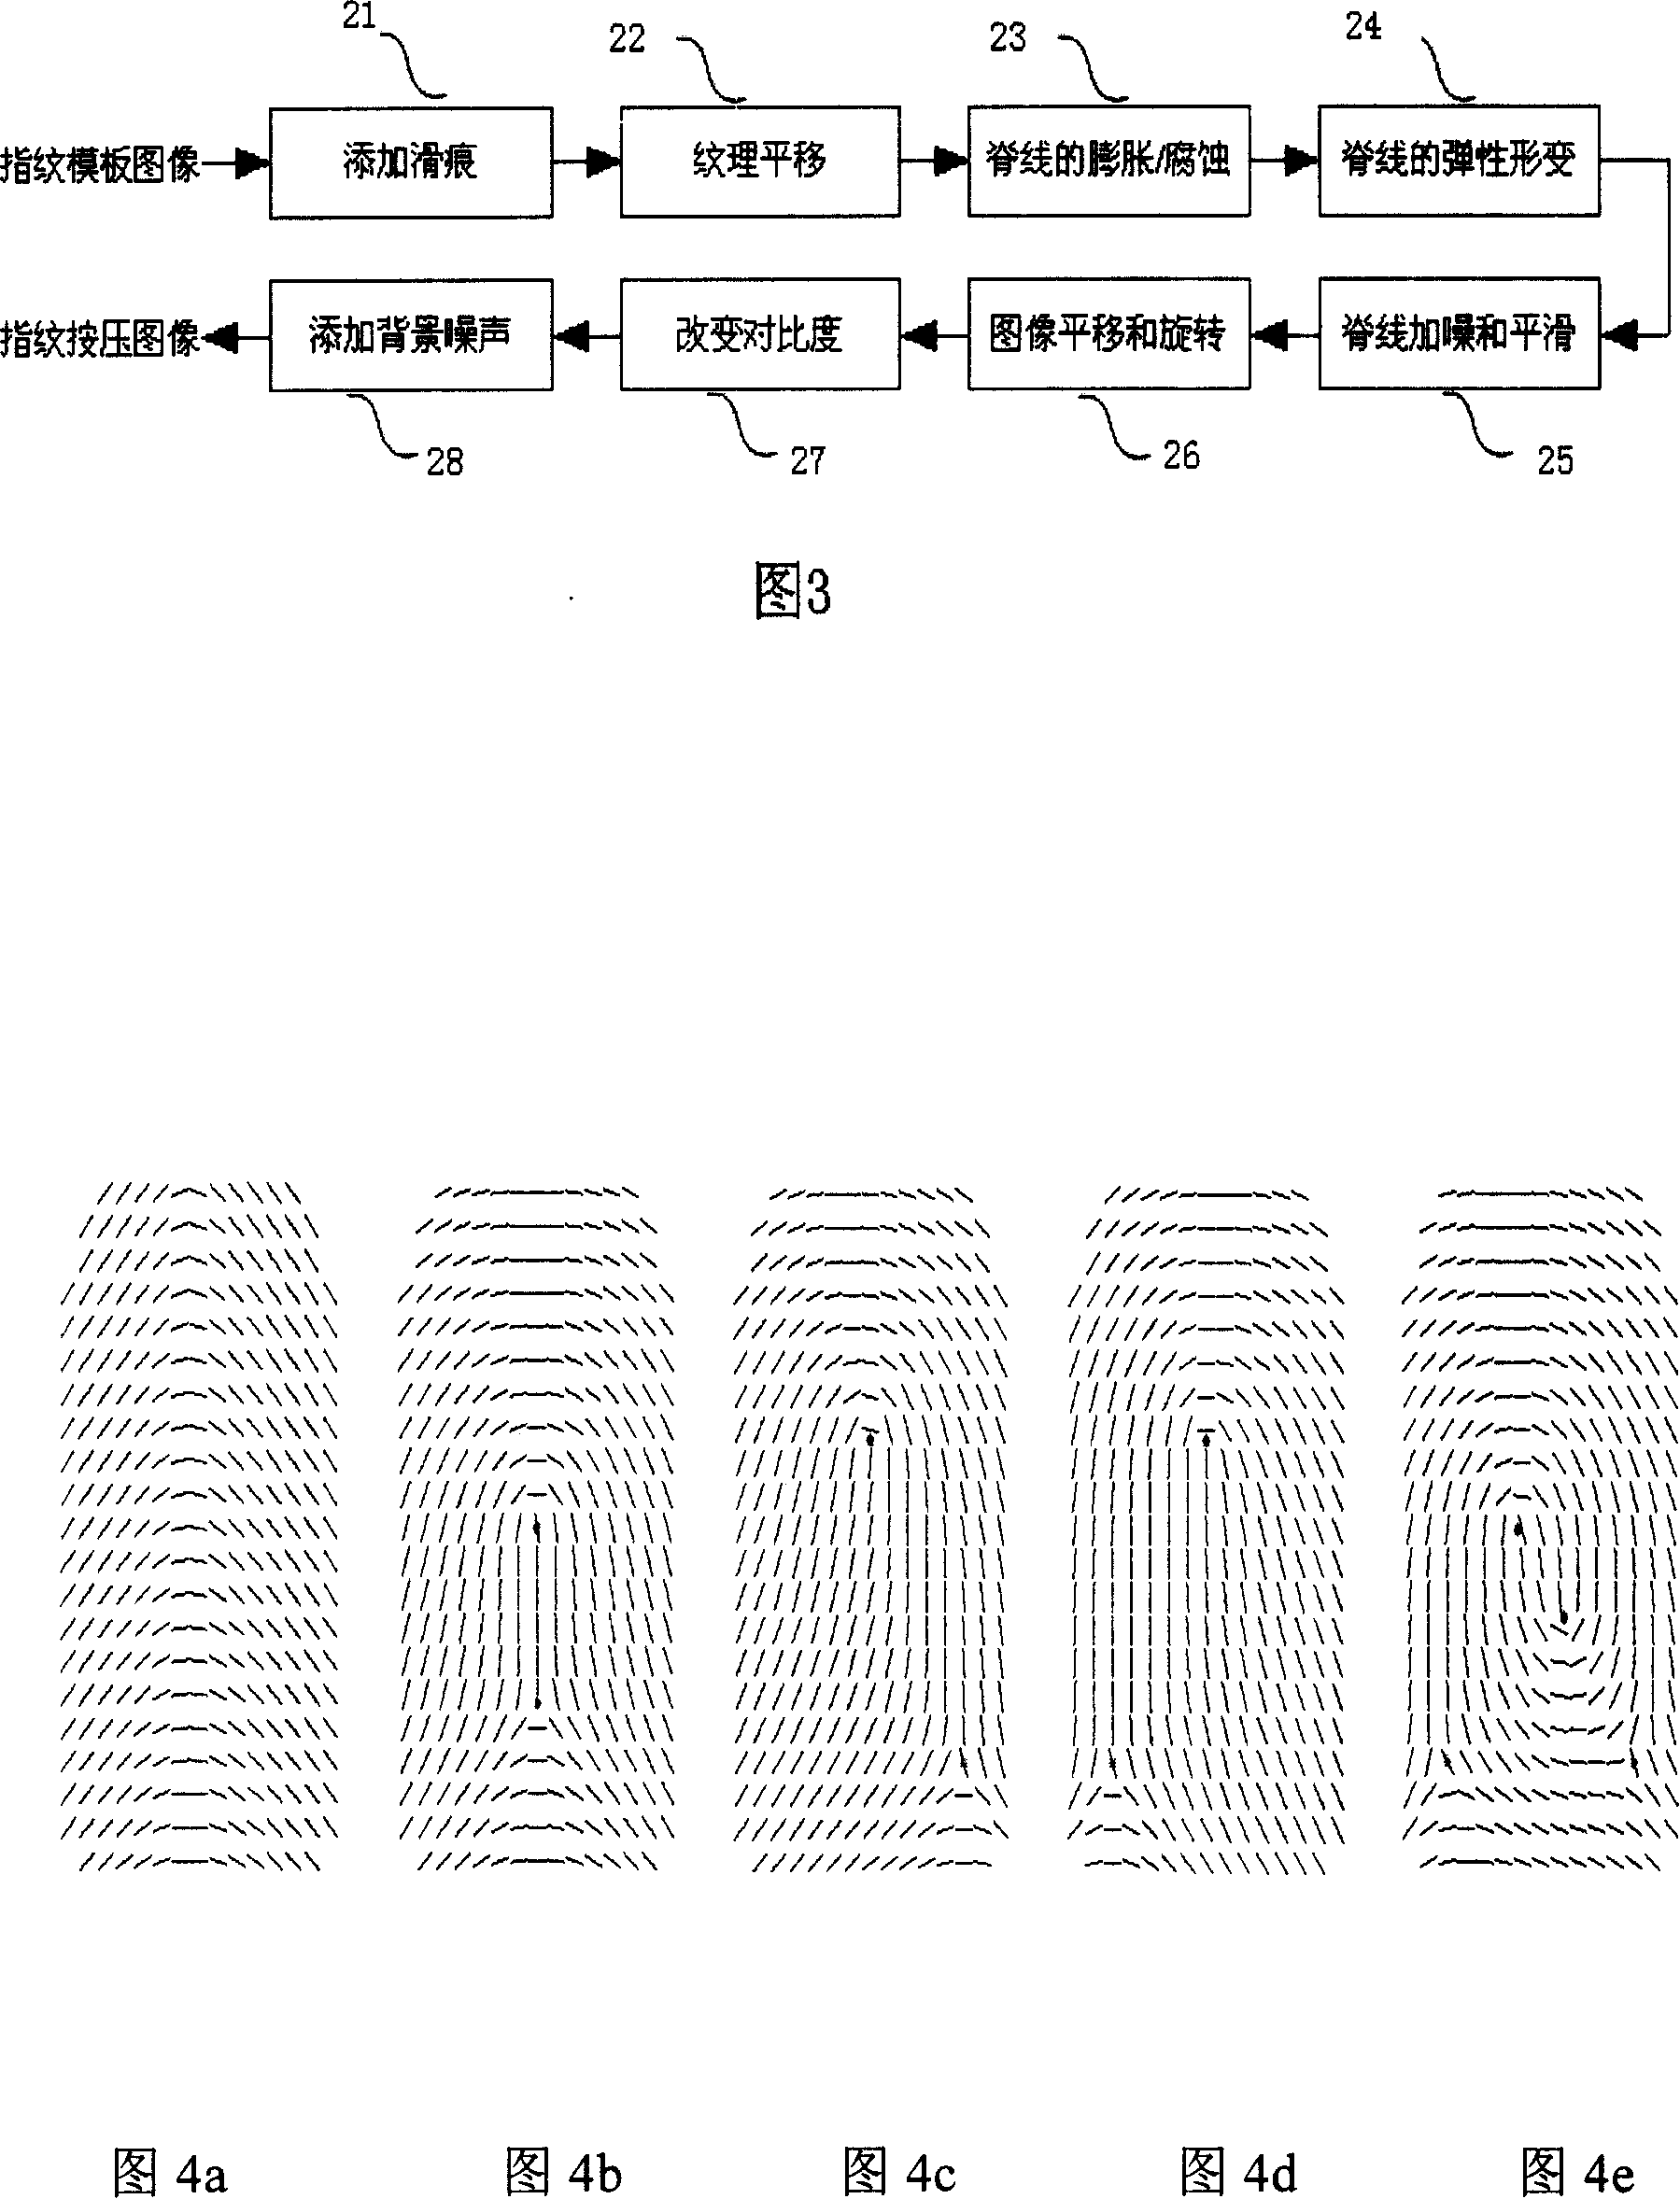 Fingerprint synthesis method based on orientation field model and Gabor filter